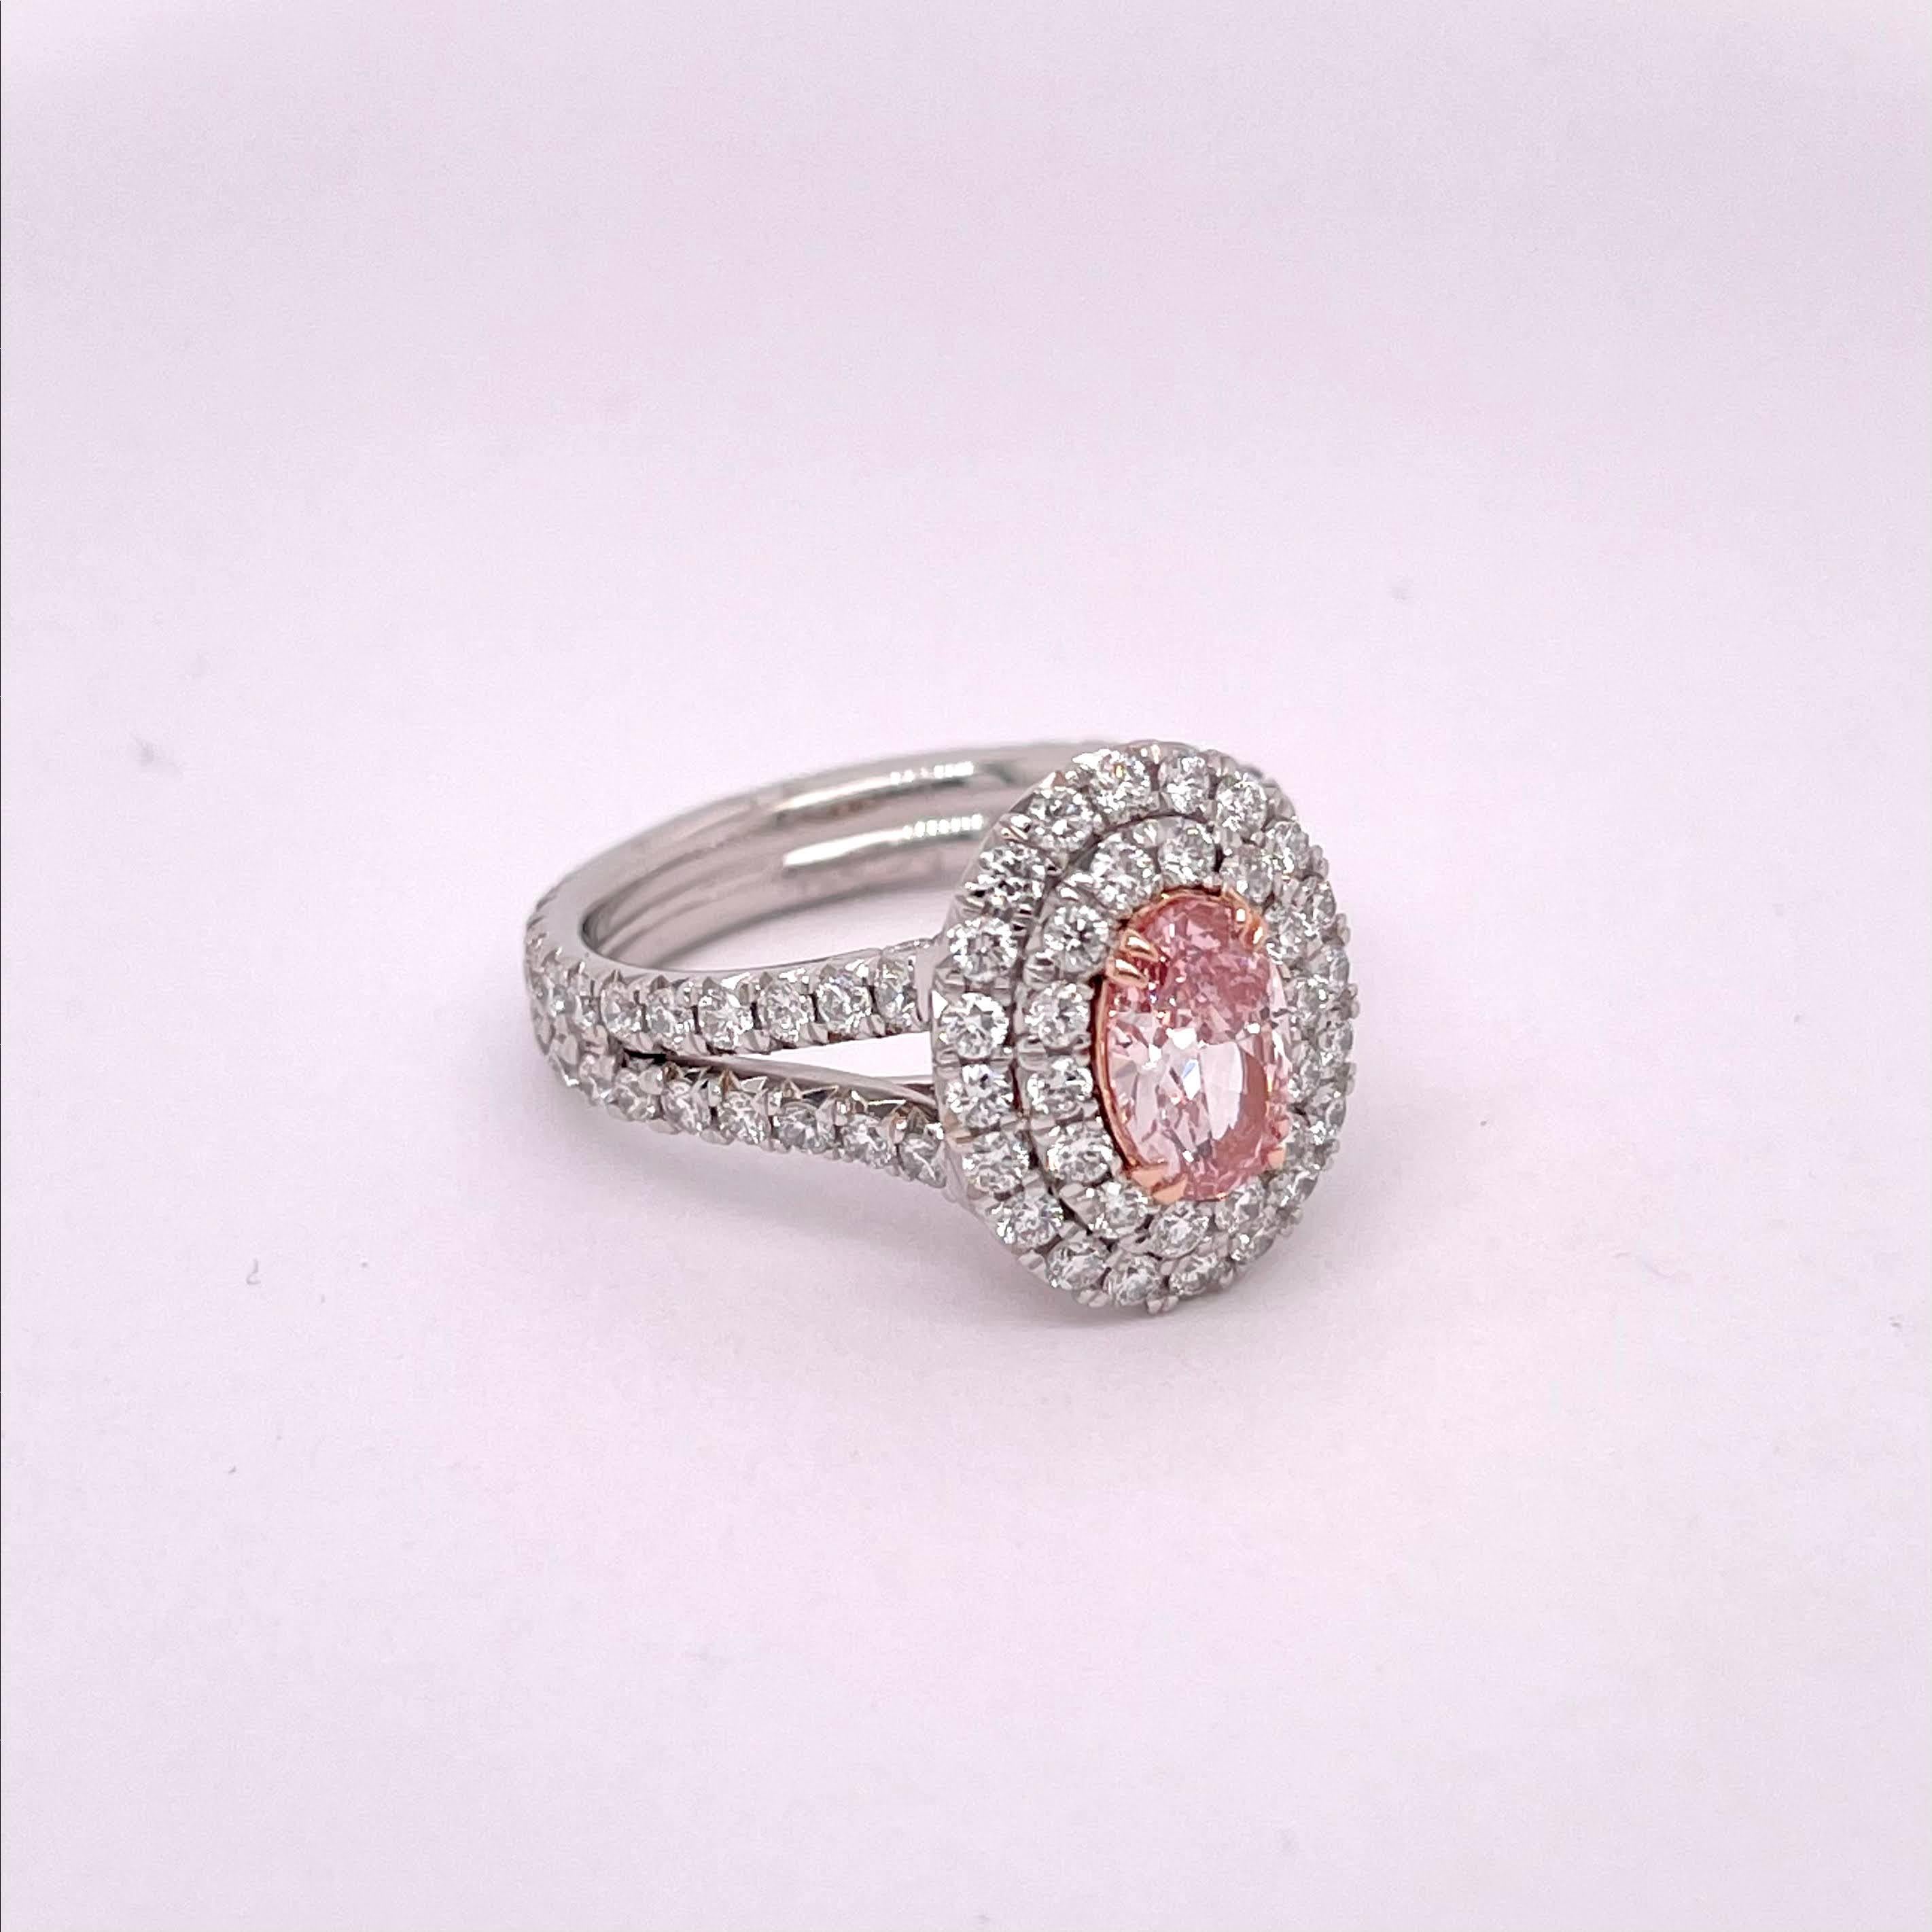 GIA Certified 0.67 Carat Fancy Intense Pink Diamond Ring For Sale 1